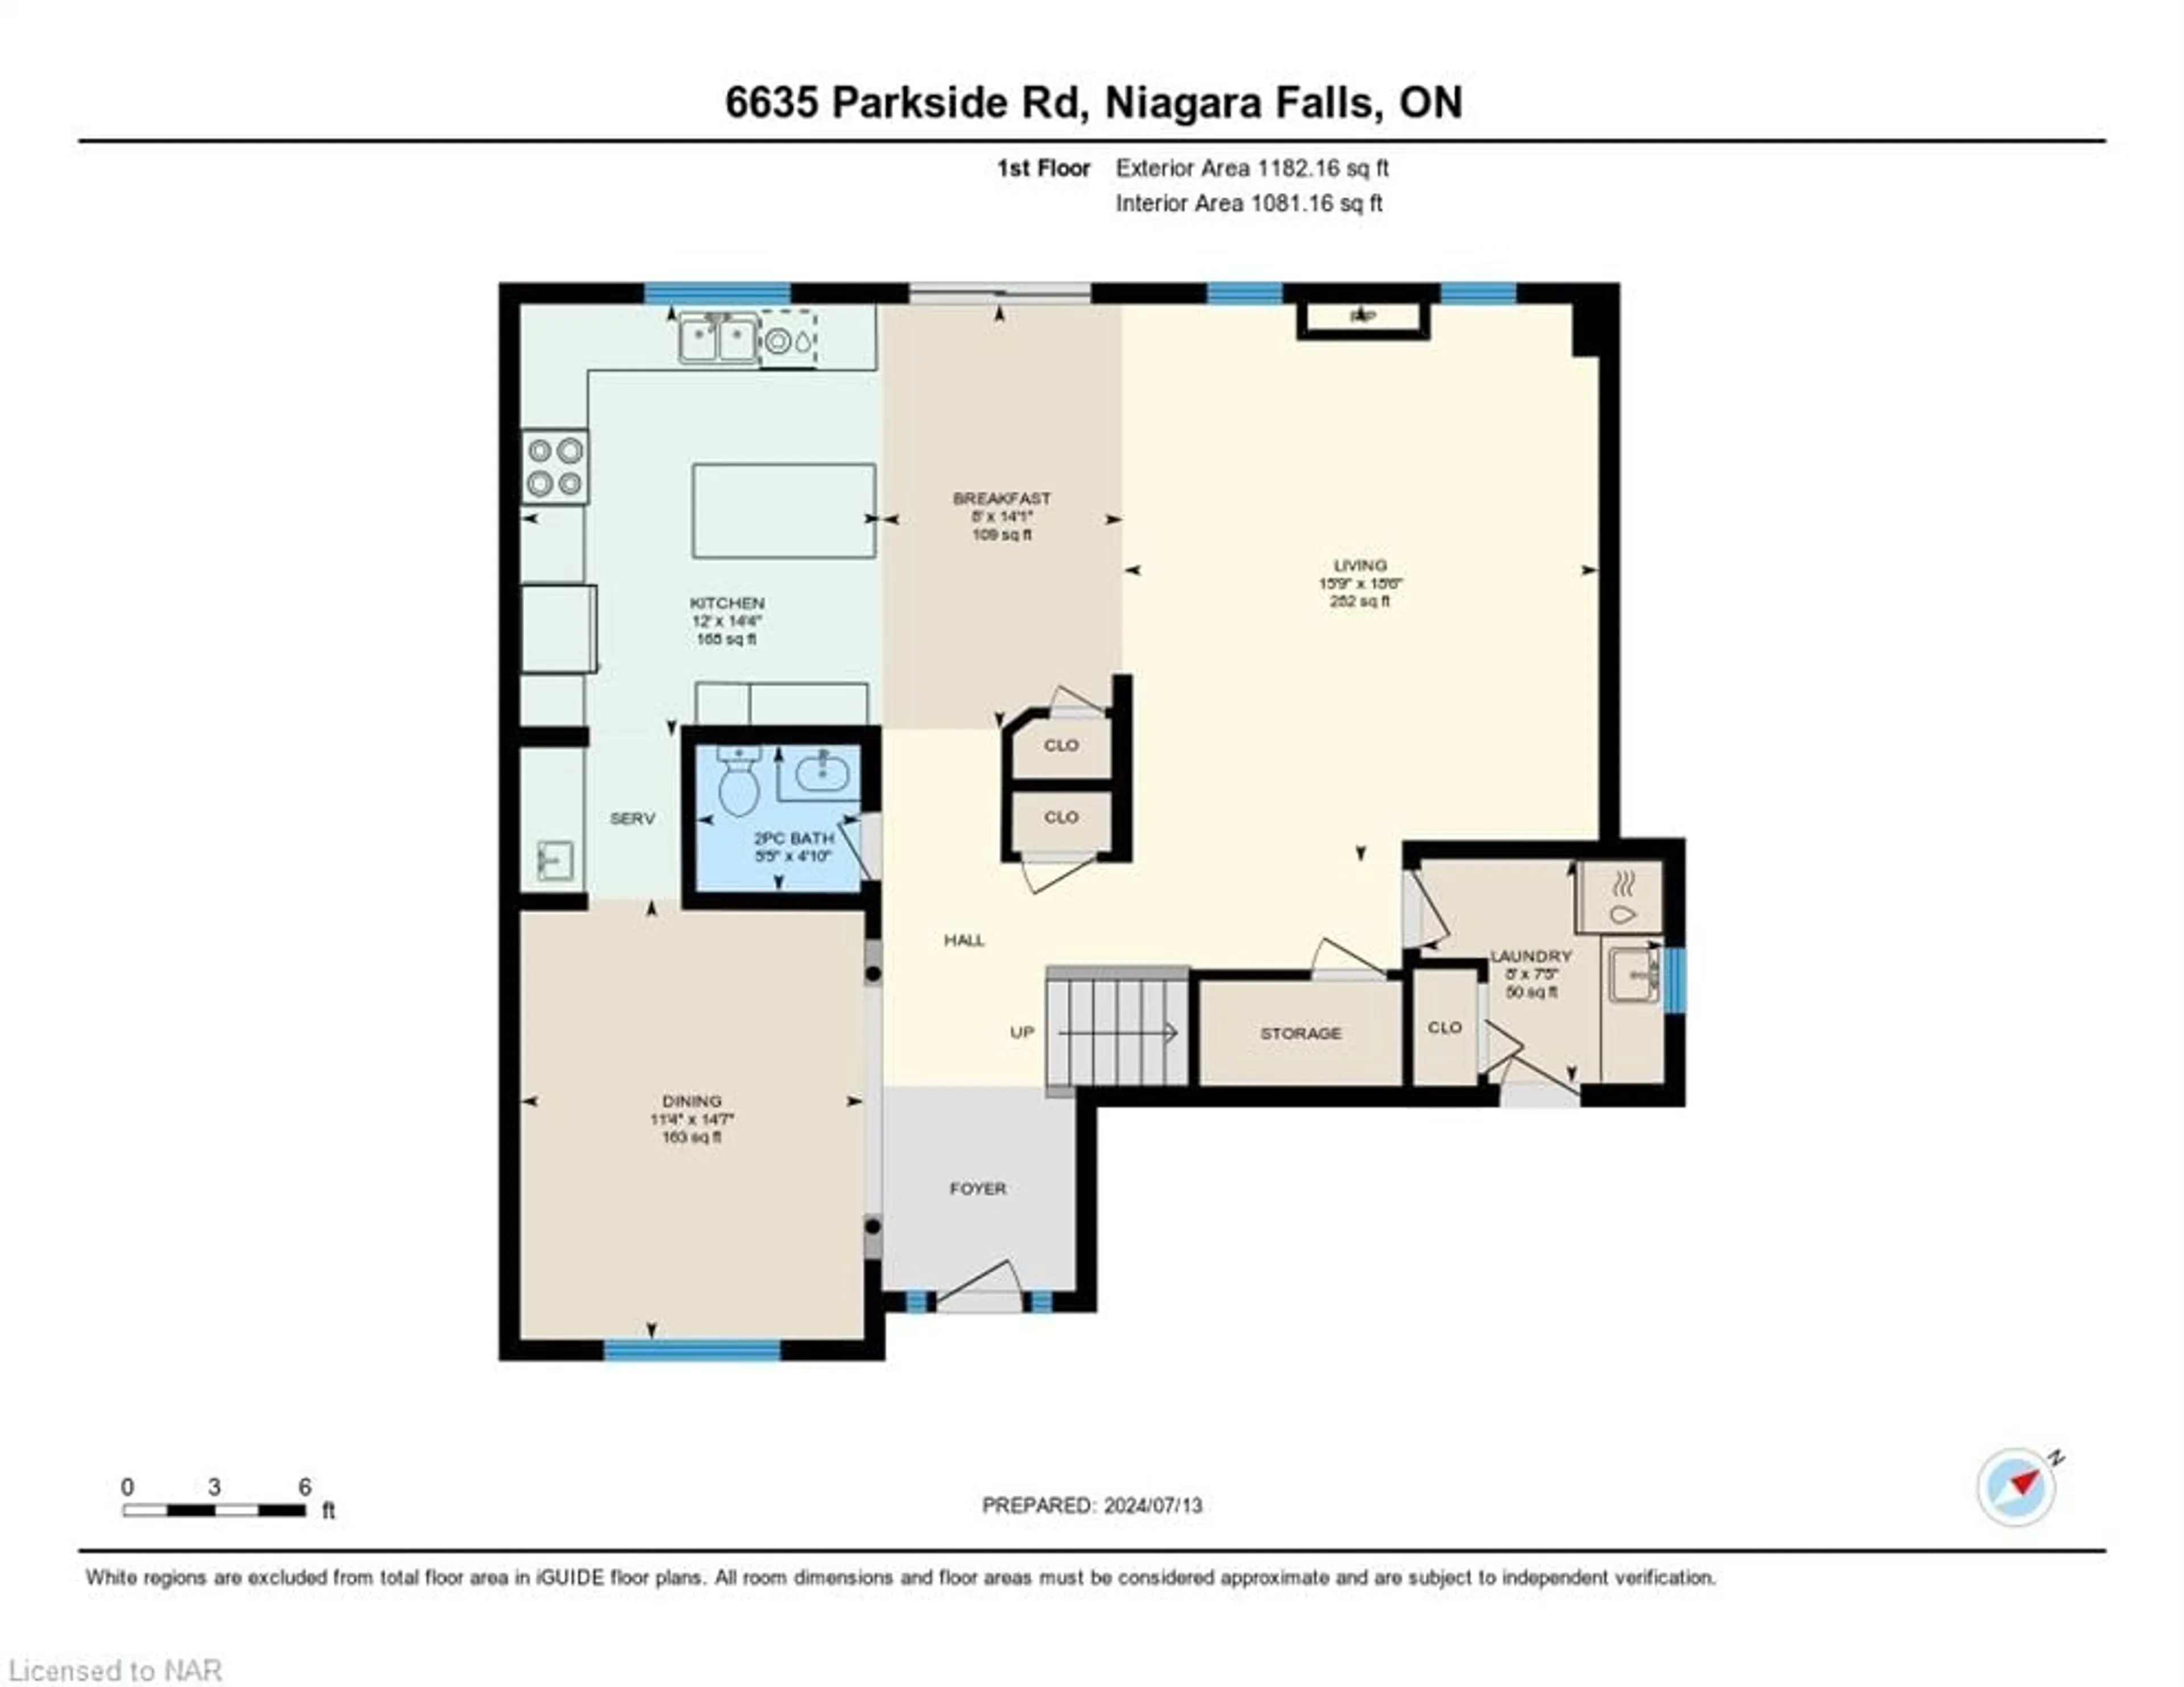 Floor plan for 6635 Parkside Rd, Niagara Falls Ontario L2H 0A8